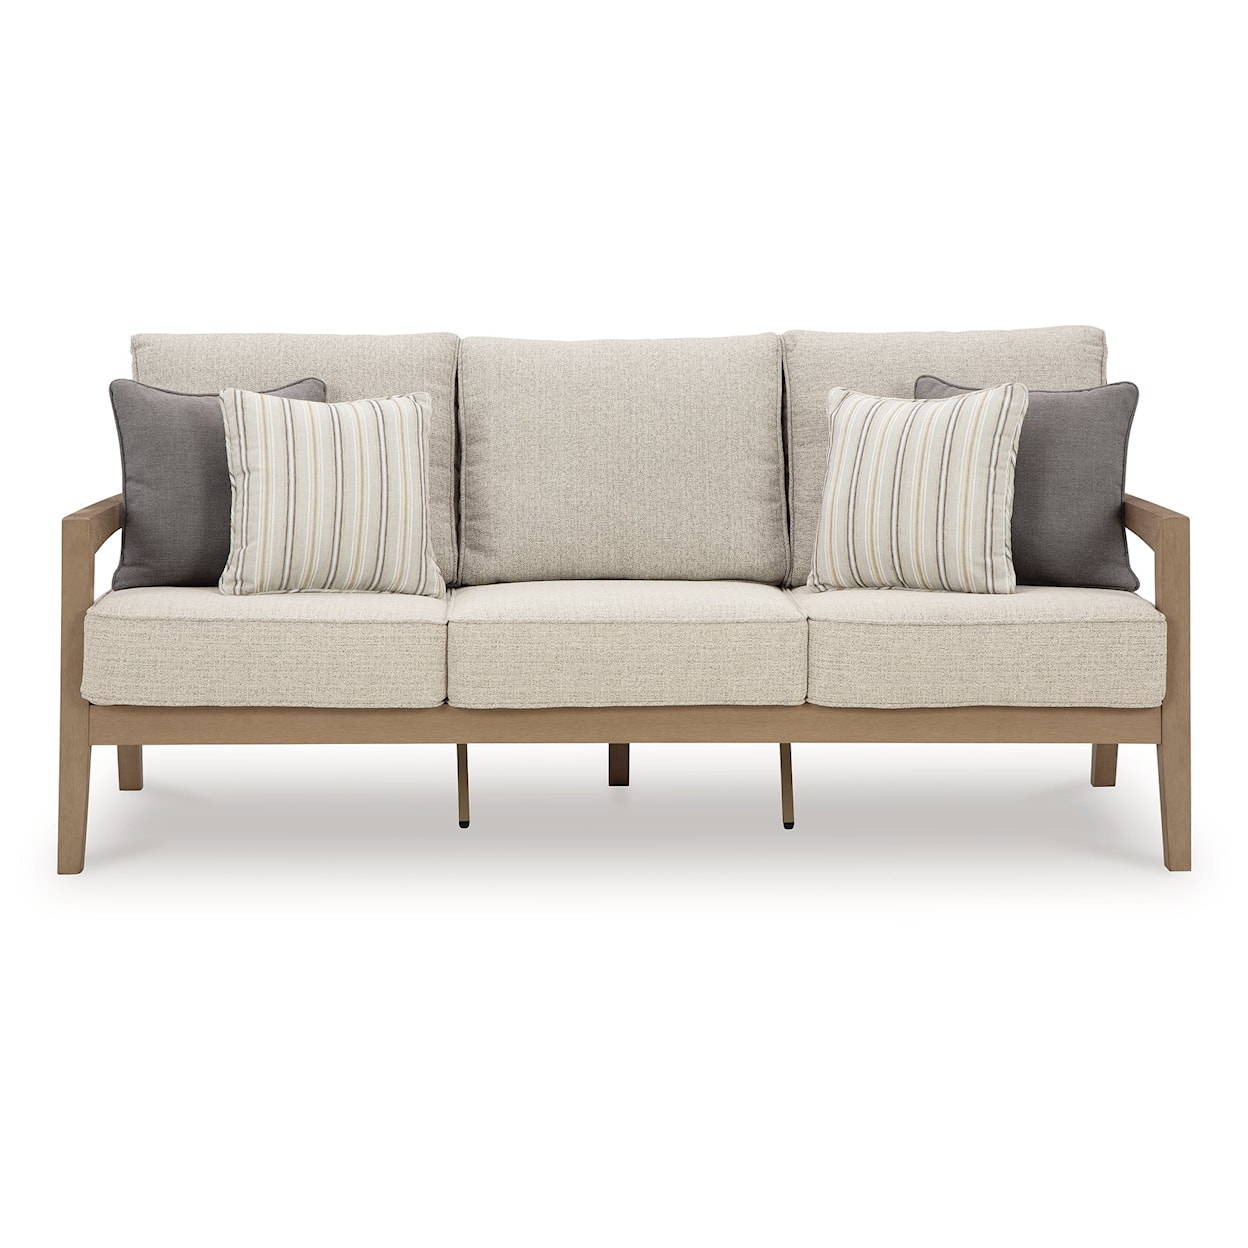 Ashley Furniture Signature Design Hallow Creek Outdoor Sofa with Cushion